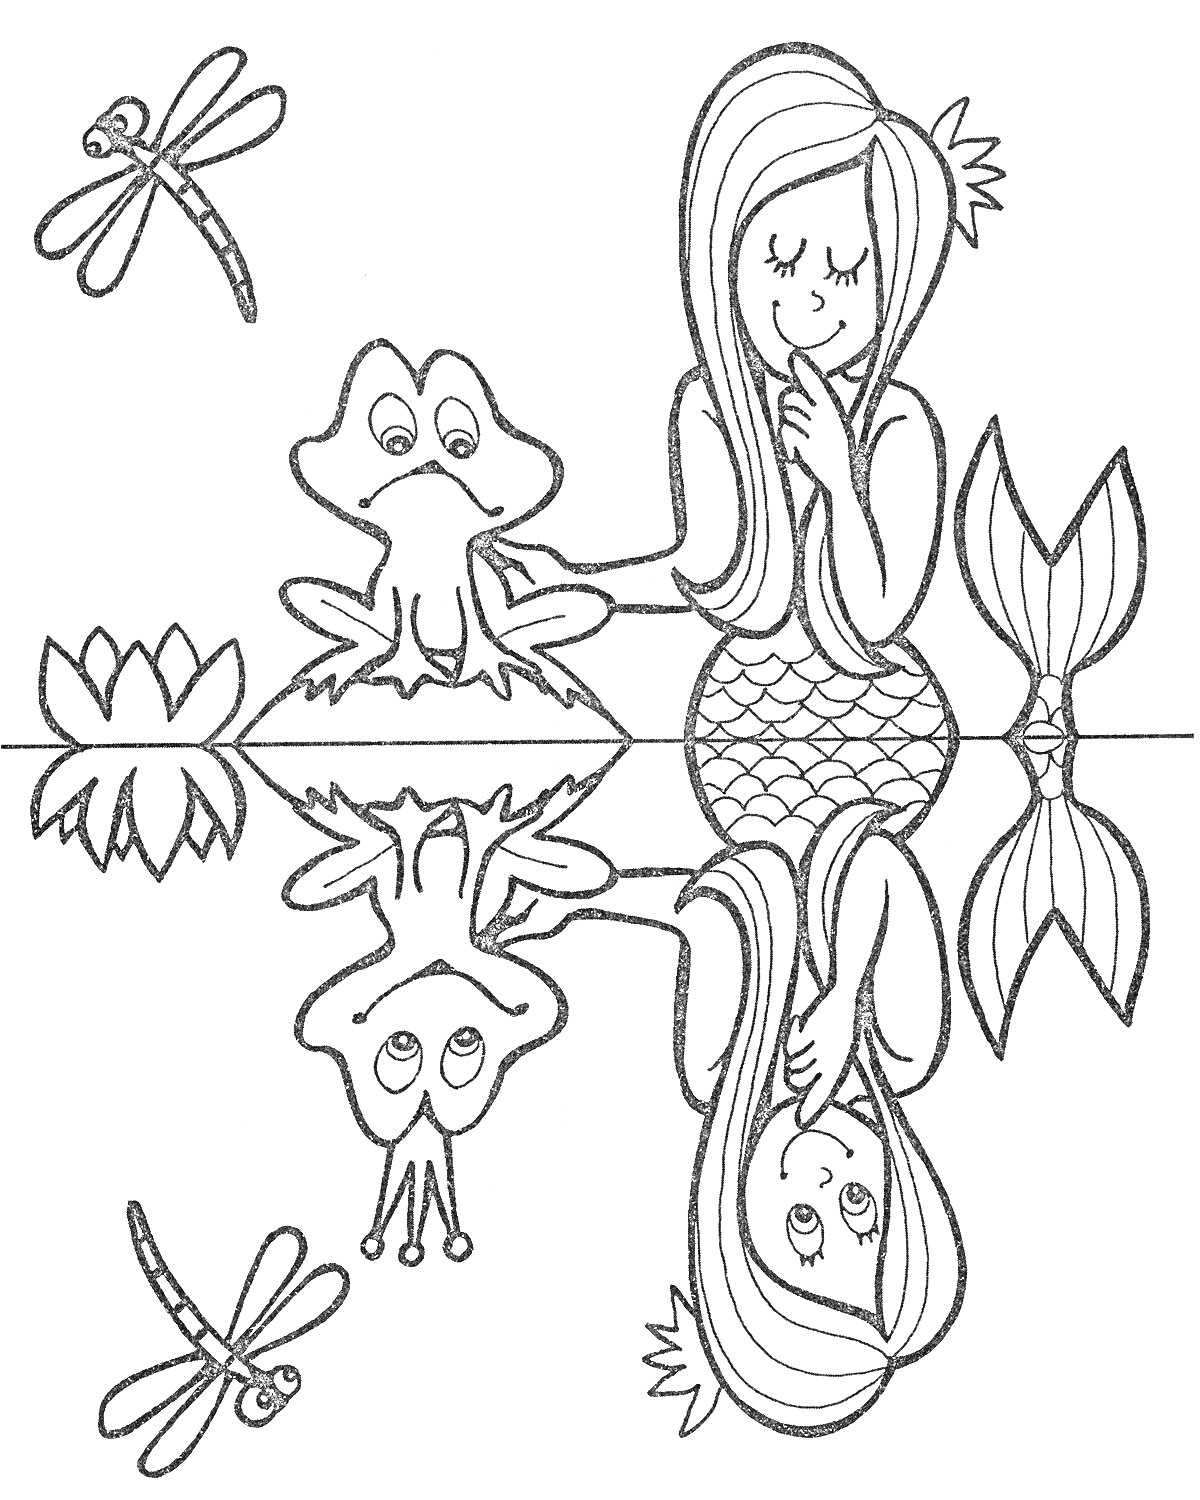 Раскраска Русалка с лягушкой в водоеме, стрекозы и цветок лотоса